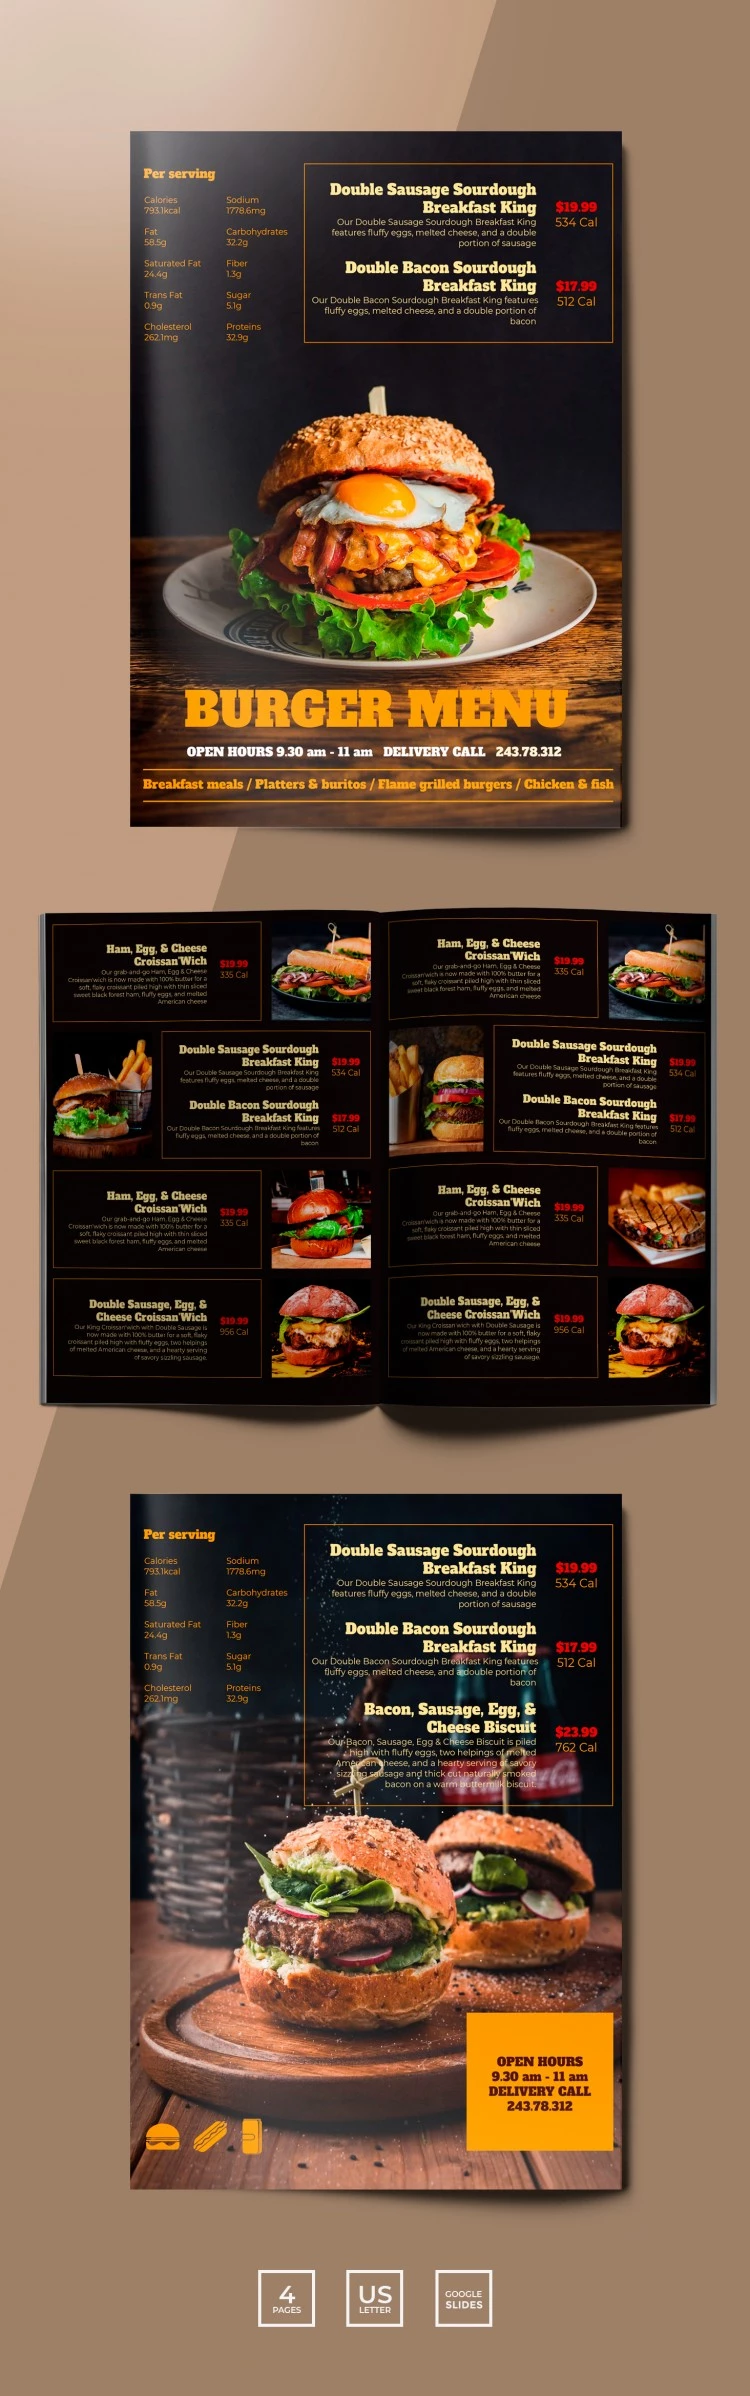 Menu Burger Restaurant - free Google Docs Template - 10061760